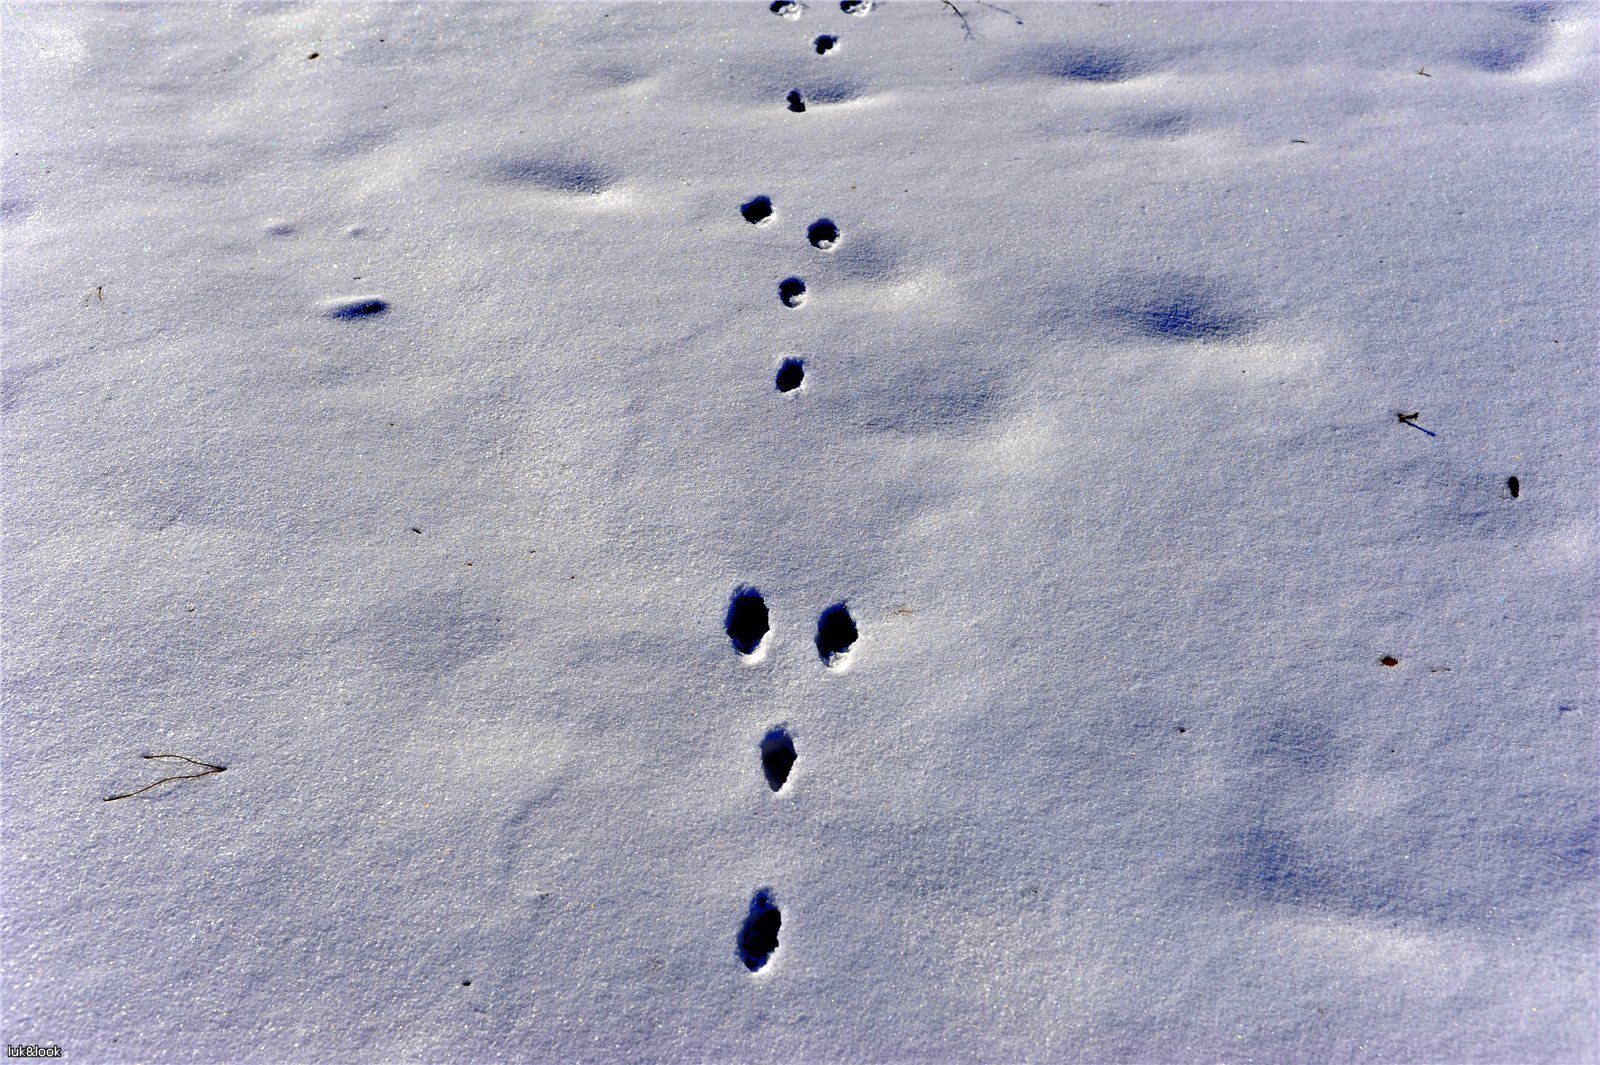 След зайца на снегу 5. Следы зайца русака. Заячьи следы. Следы зайца беляка. Следы зайца русака на снегу.